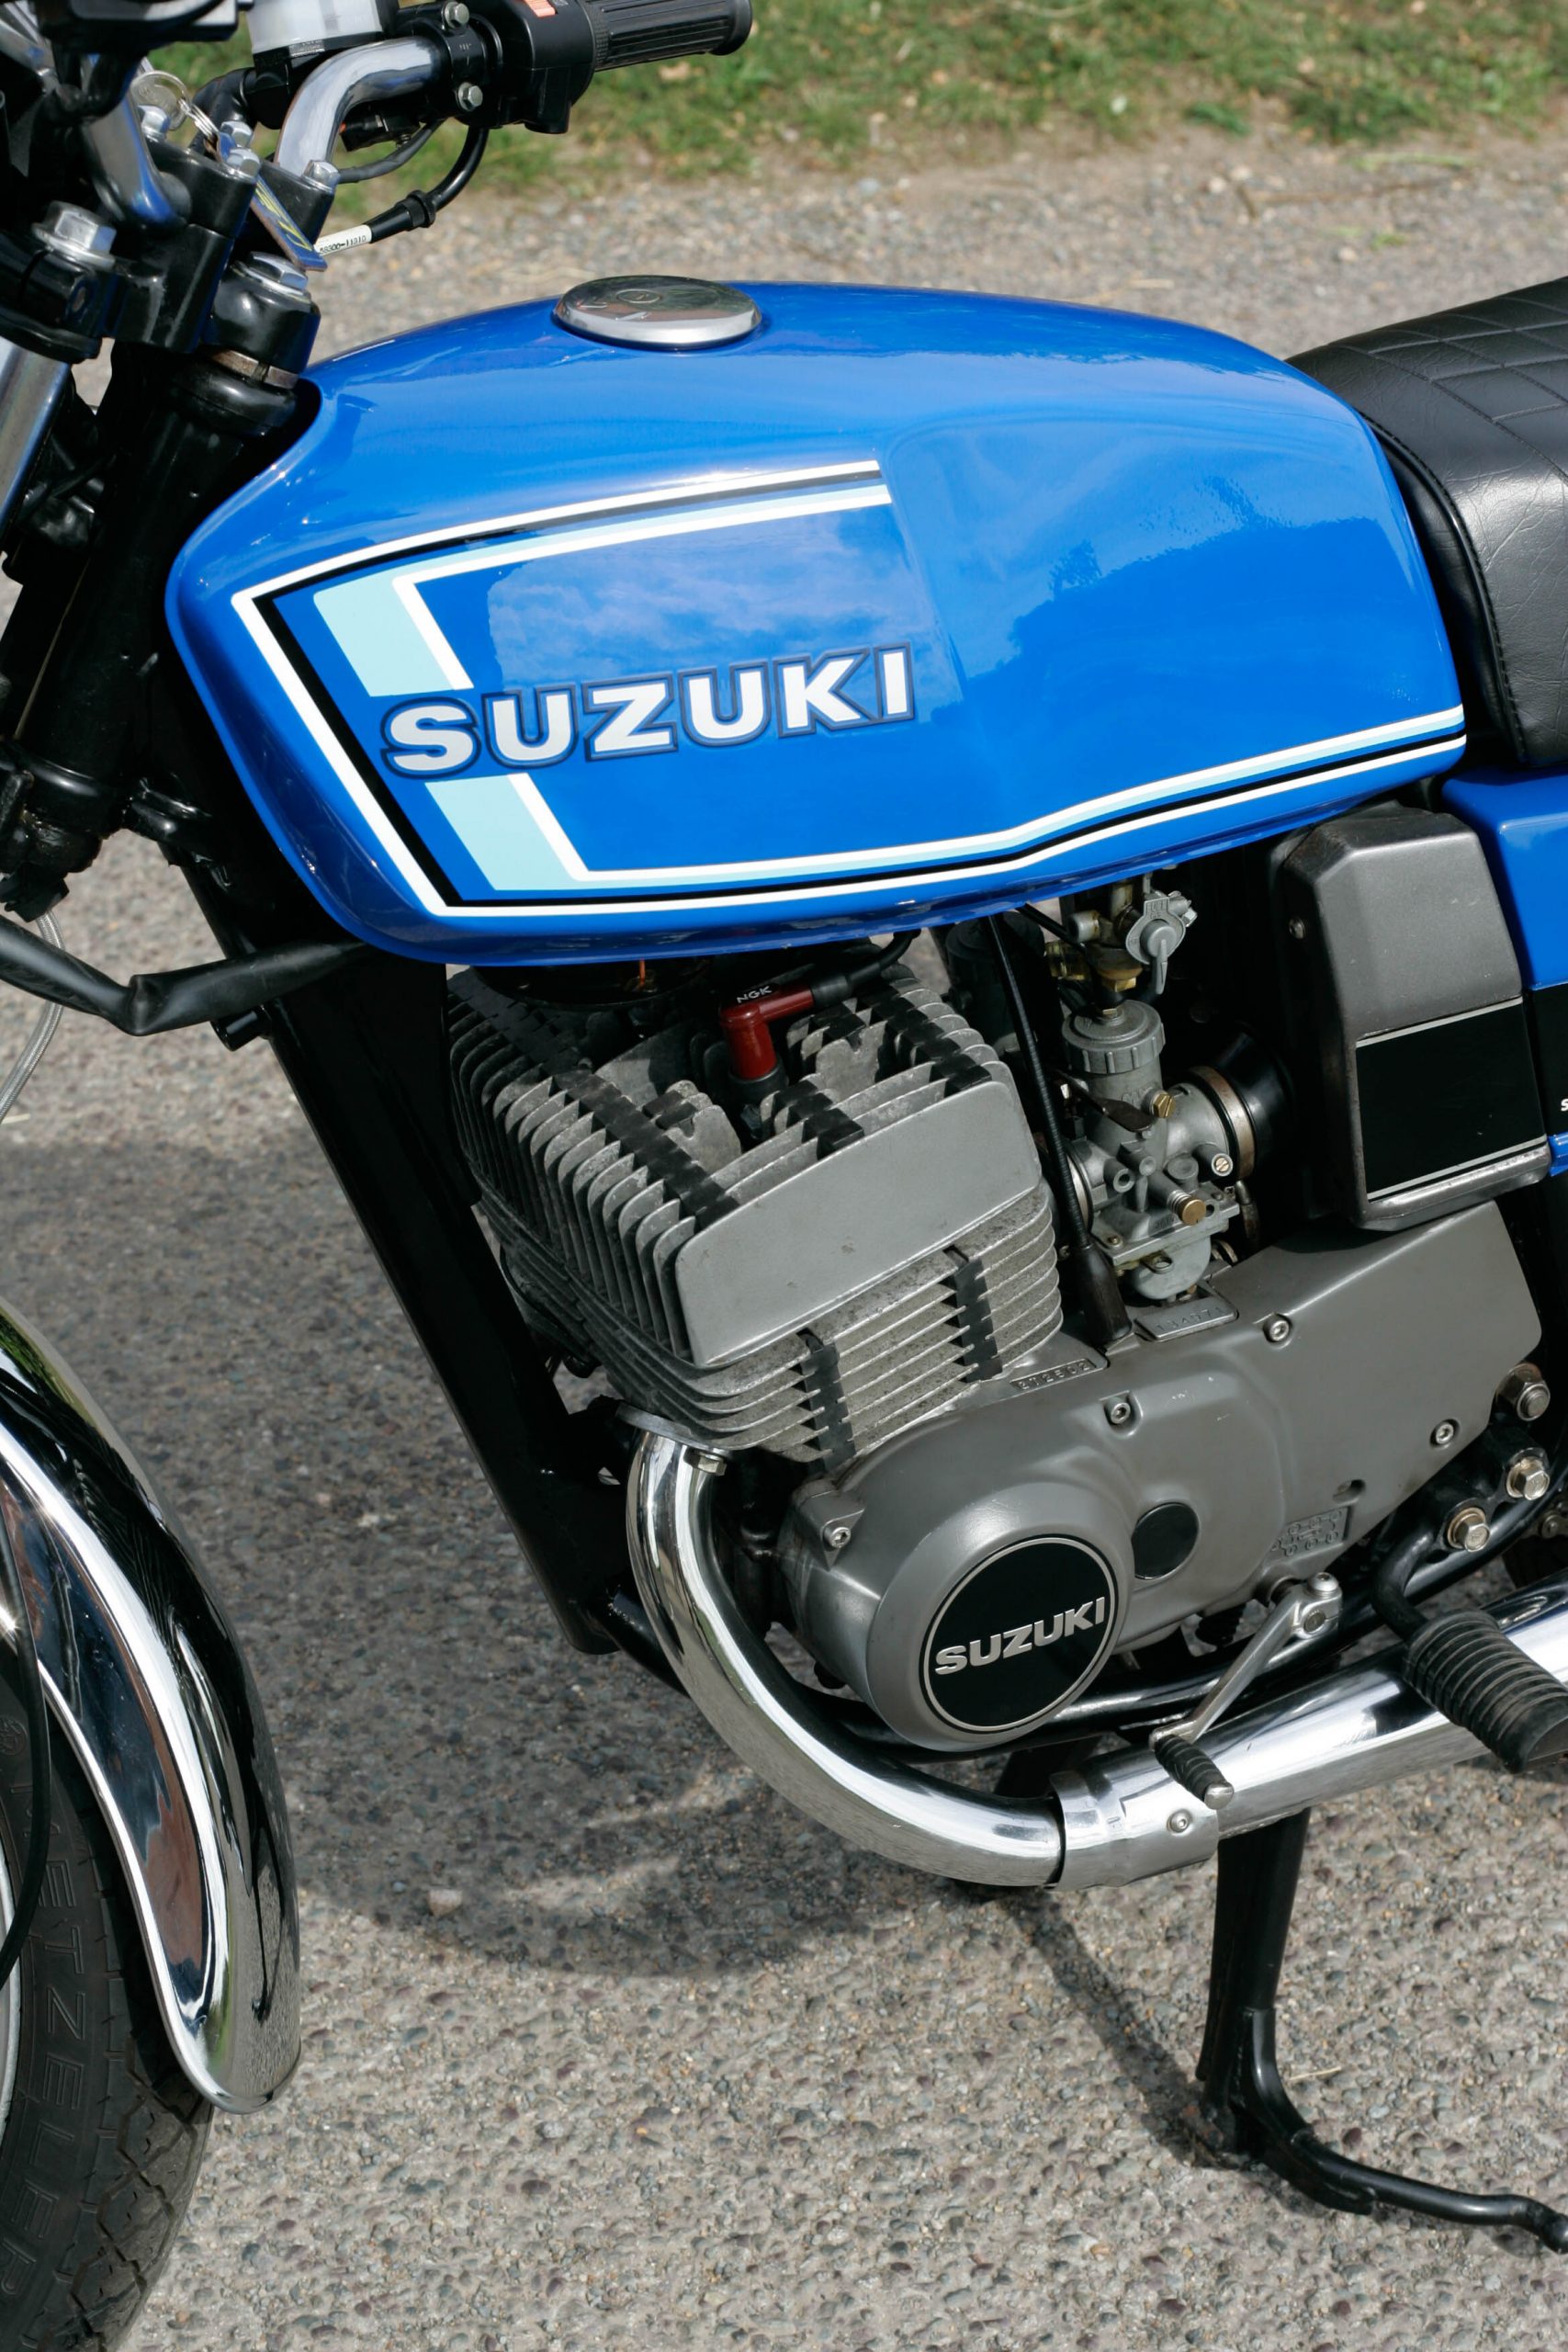 Suzuki GT250 X7 classic bike review